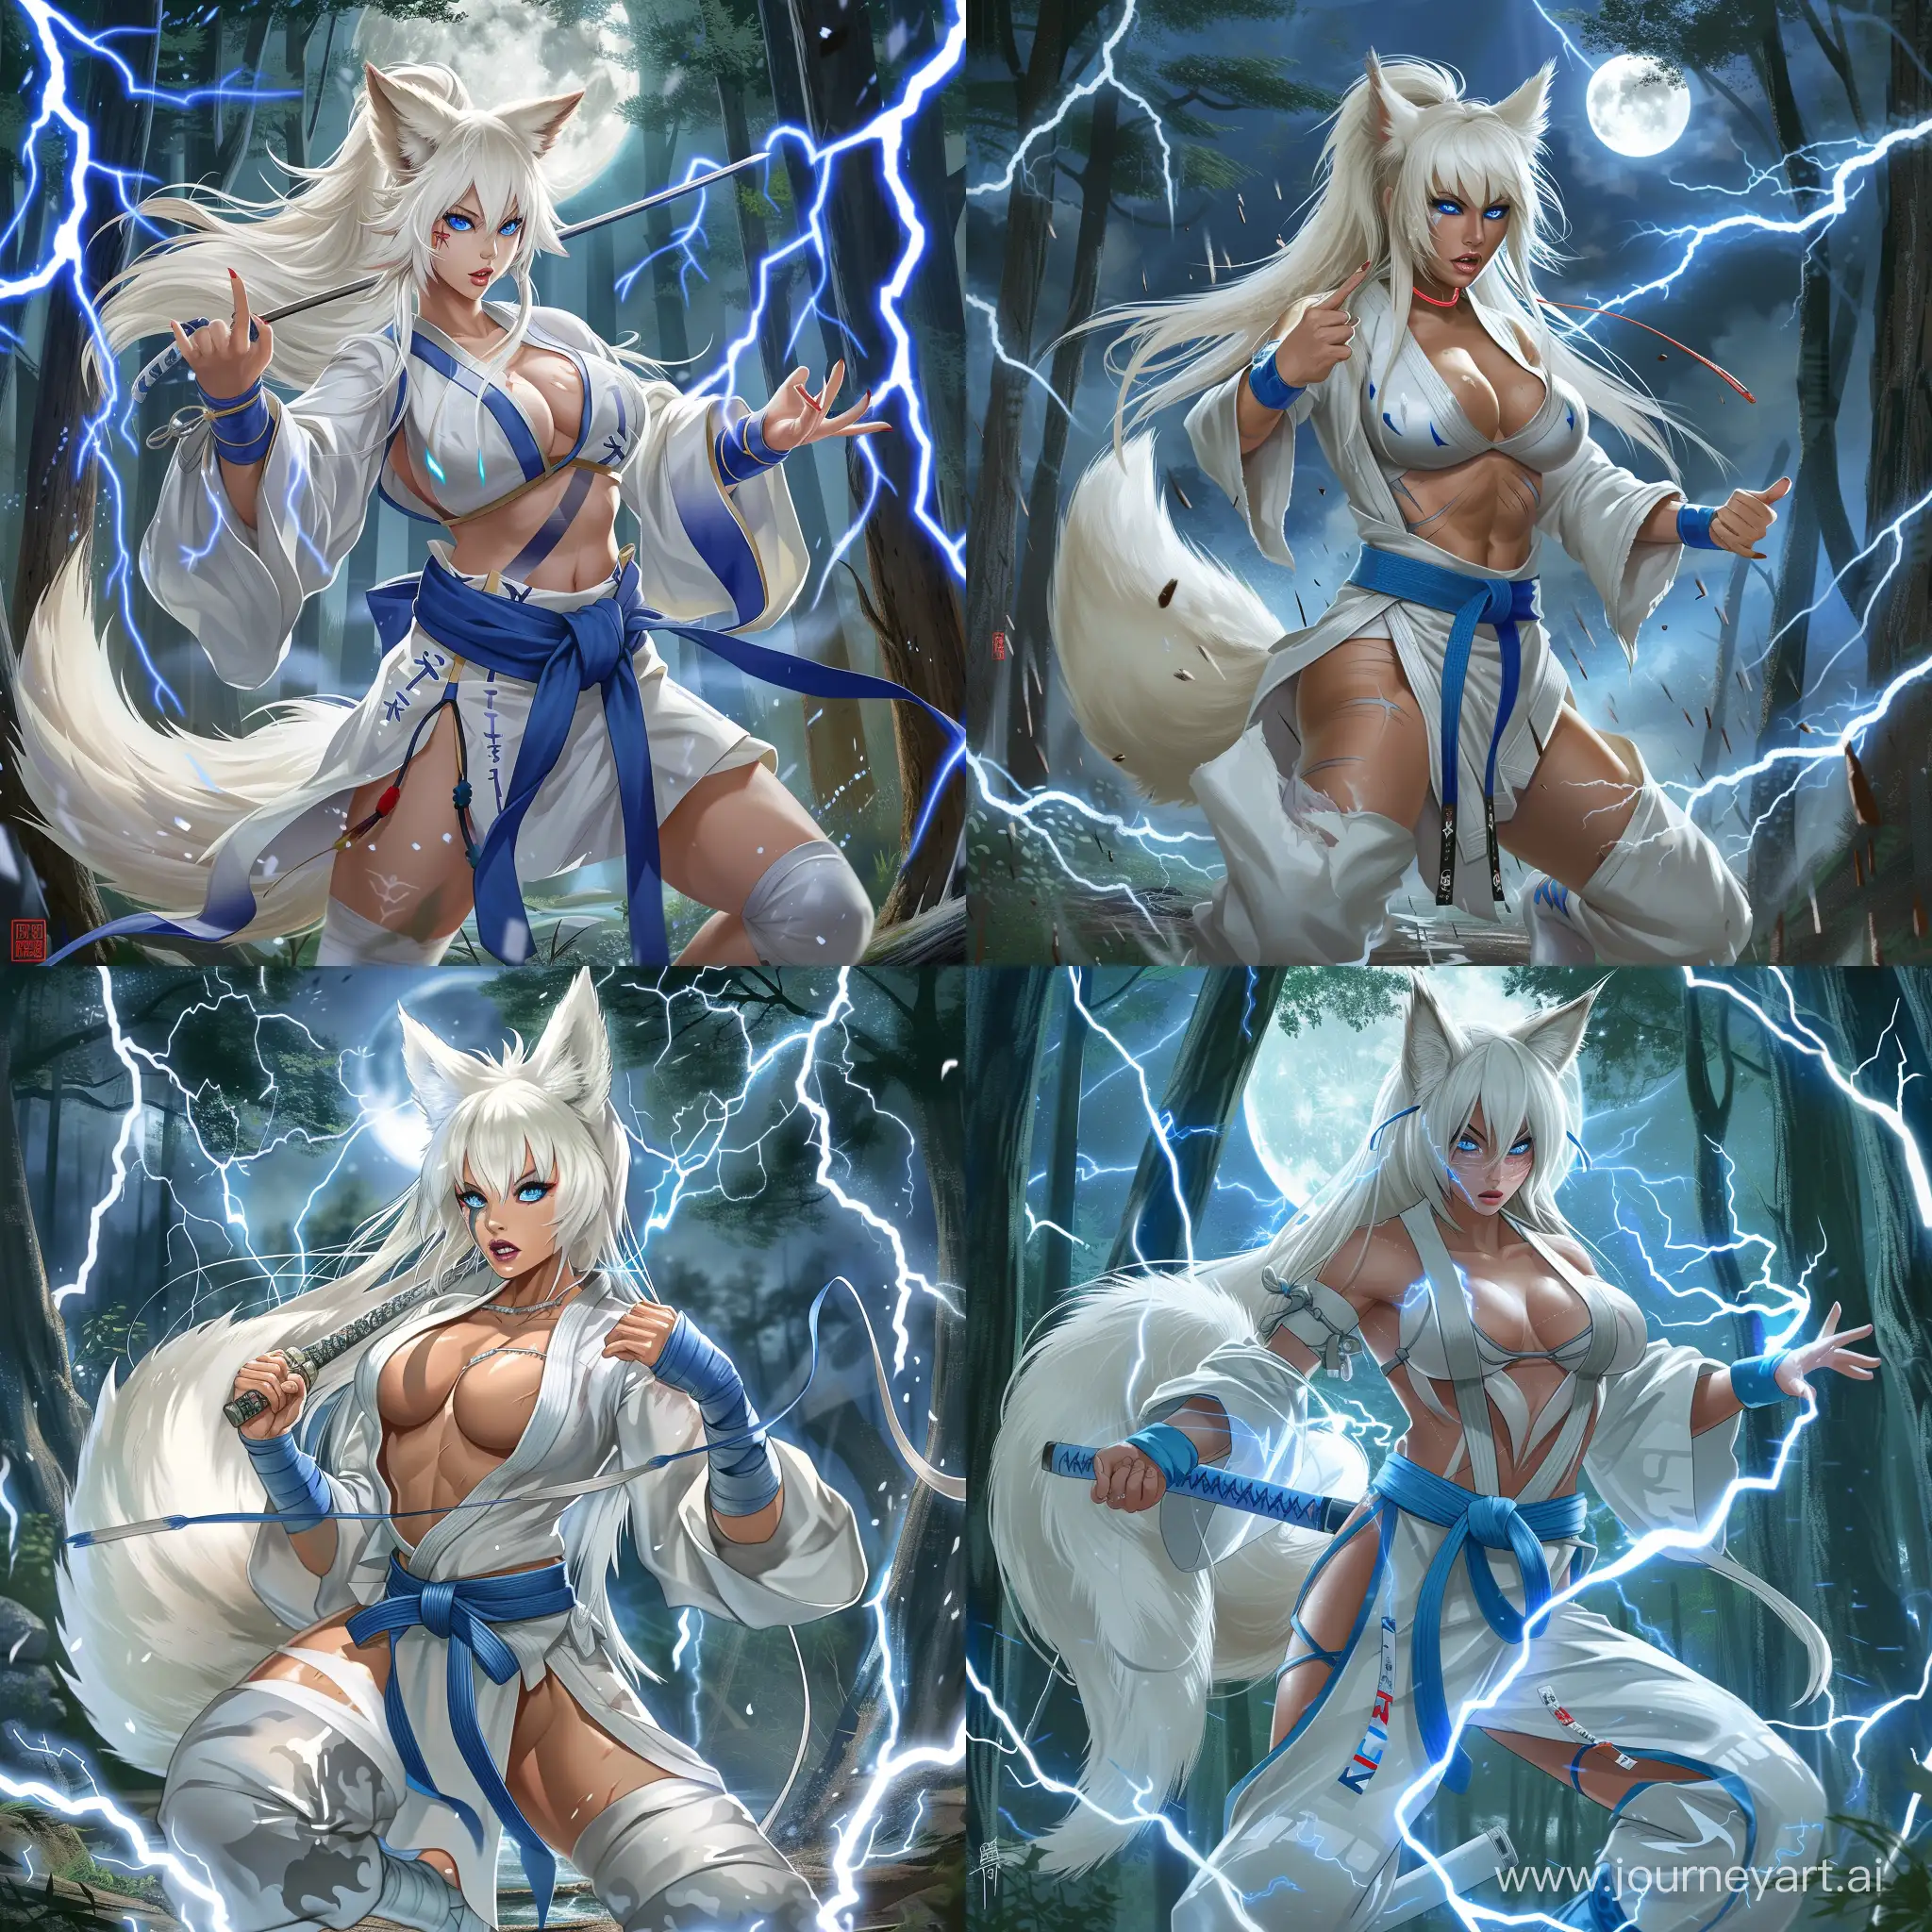 Dynamic-Asian-Warrior-Woman-with-Katana-in-Anime-Forest-Scene